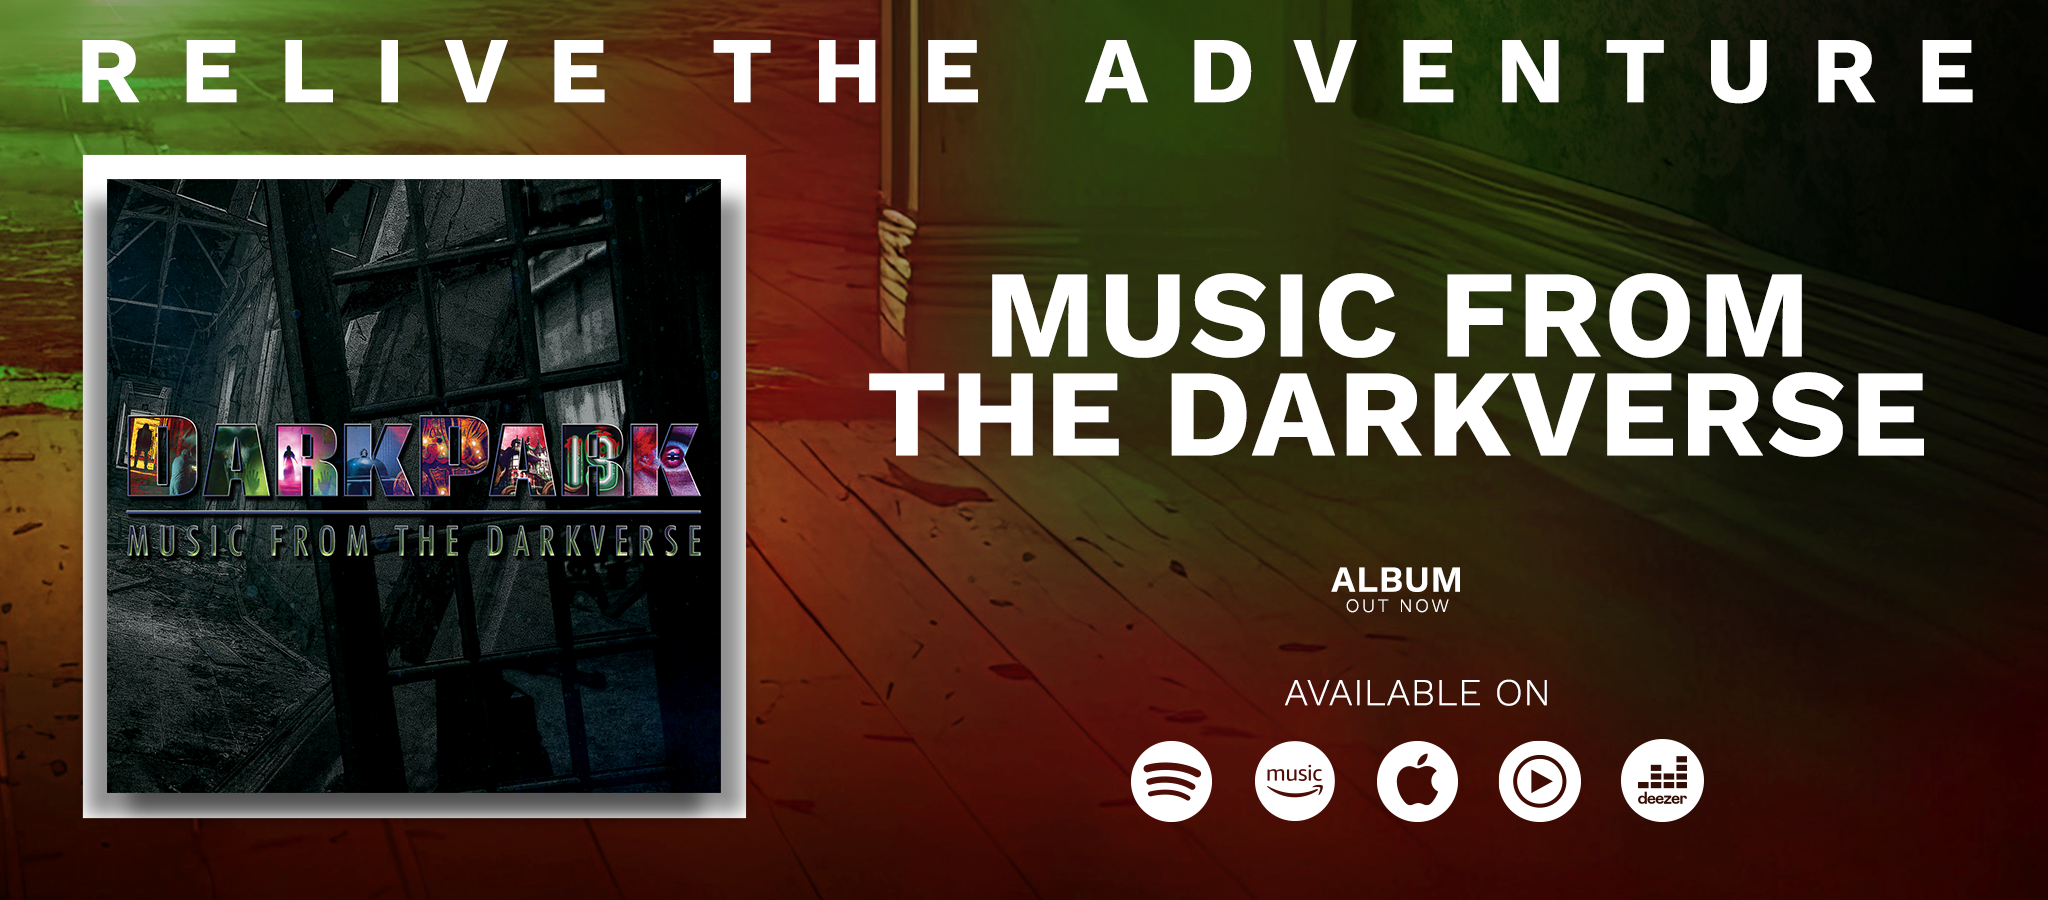 DarkPark: Music from the DarkVerse